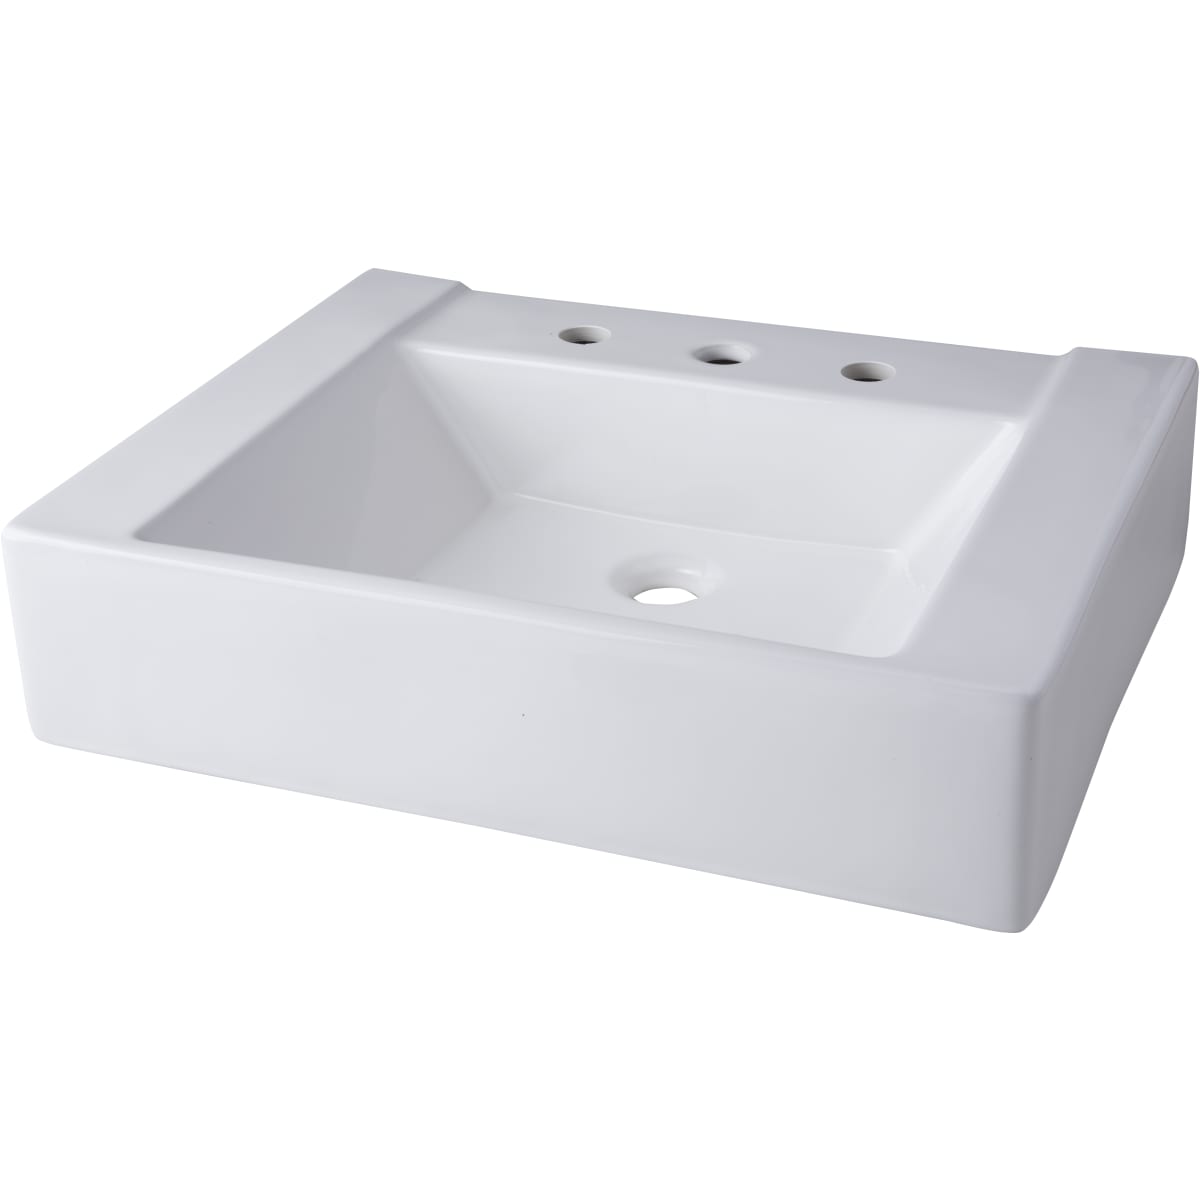 Mirabelle Mir24198awh White 24 Porcelain Console Bathroom Sink